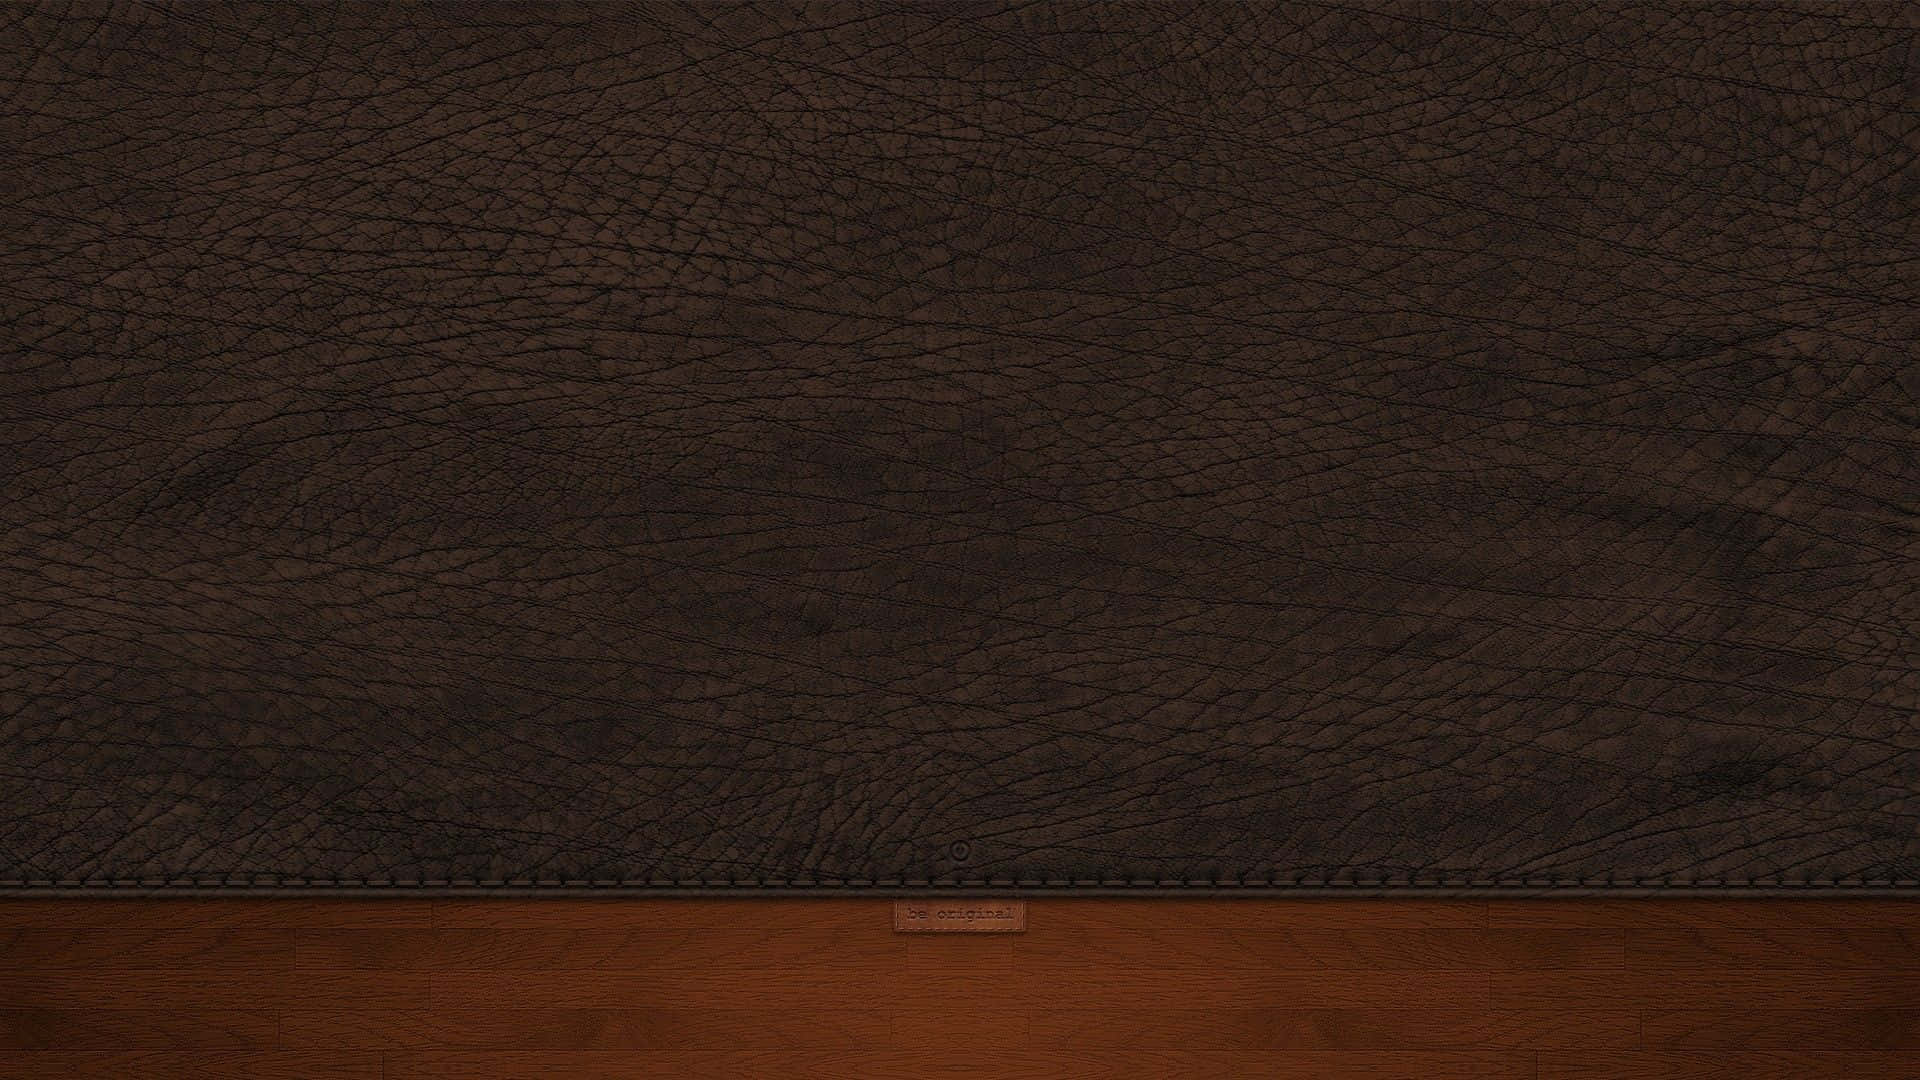 Premium Quality Leather Texture Wallpaper